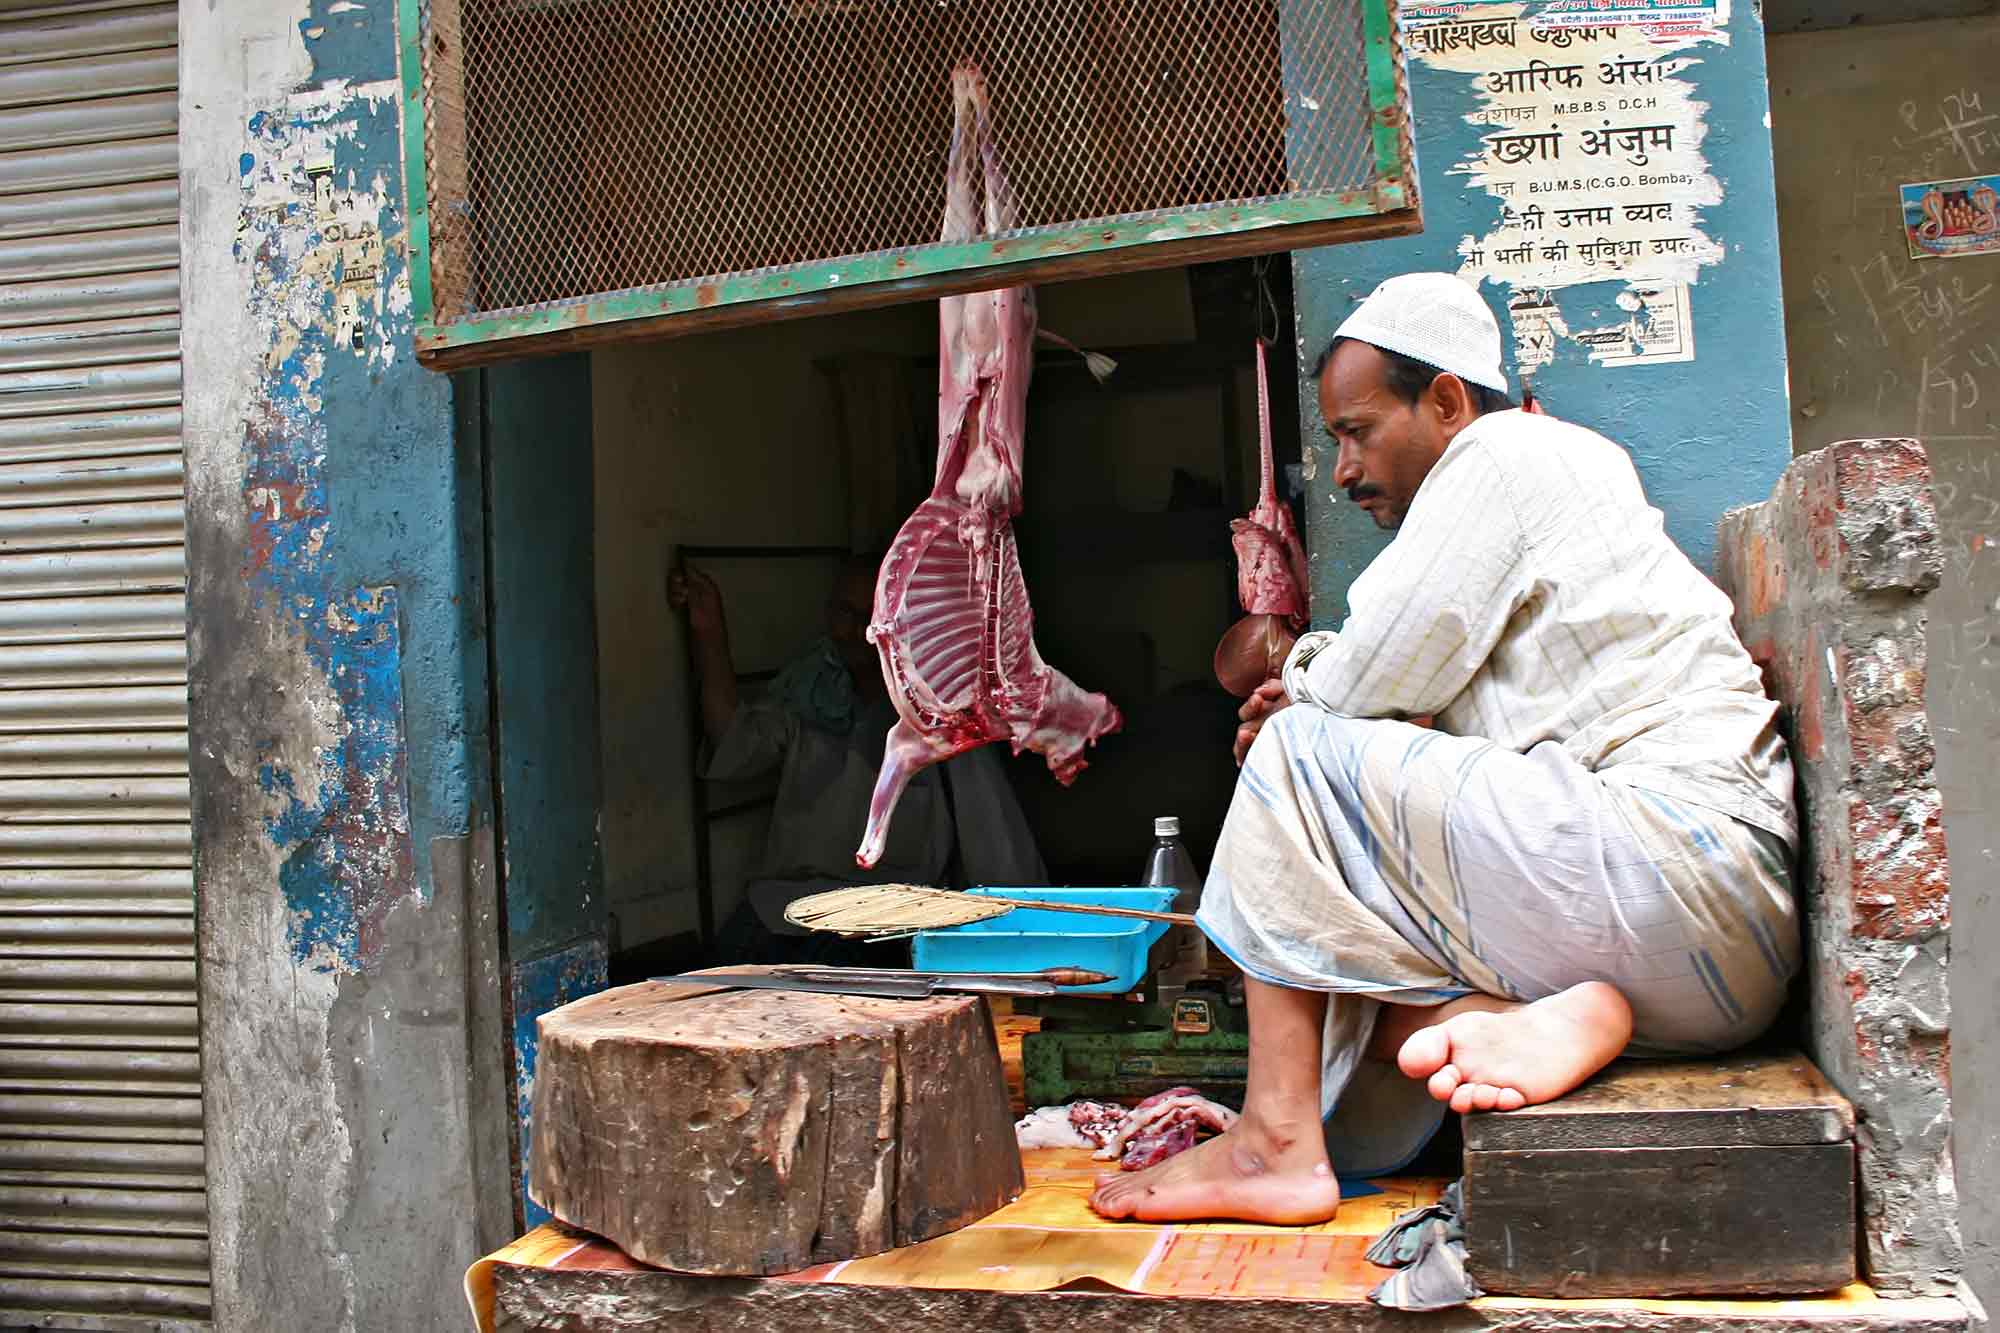 Meat shop in Kolkata, India. © Ulli Maier & Nisa Maier